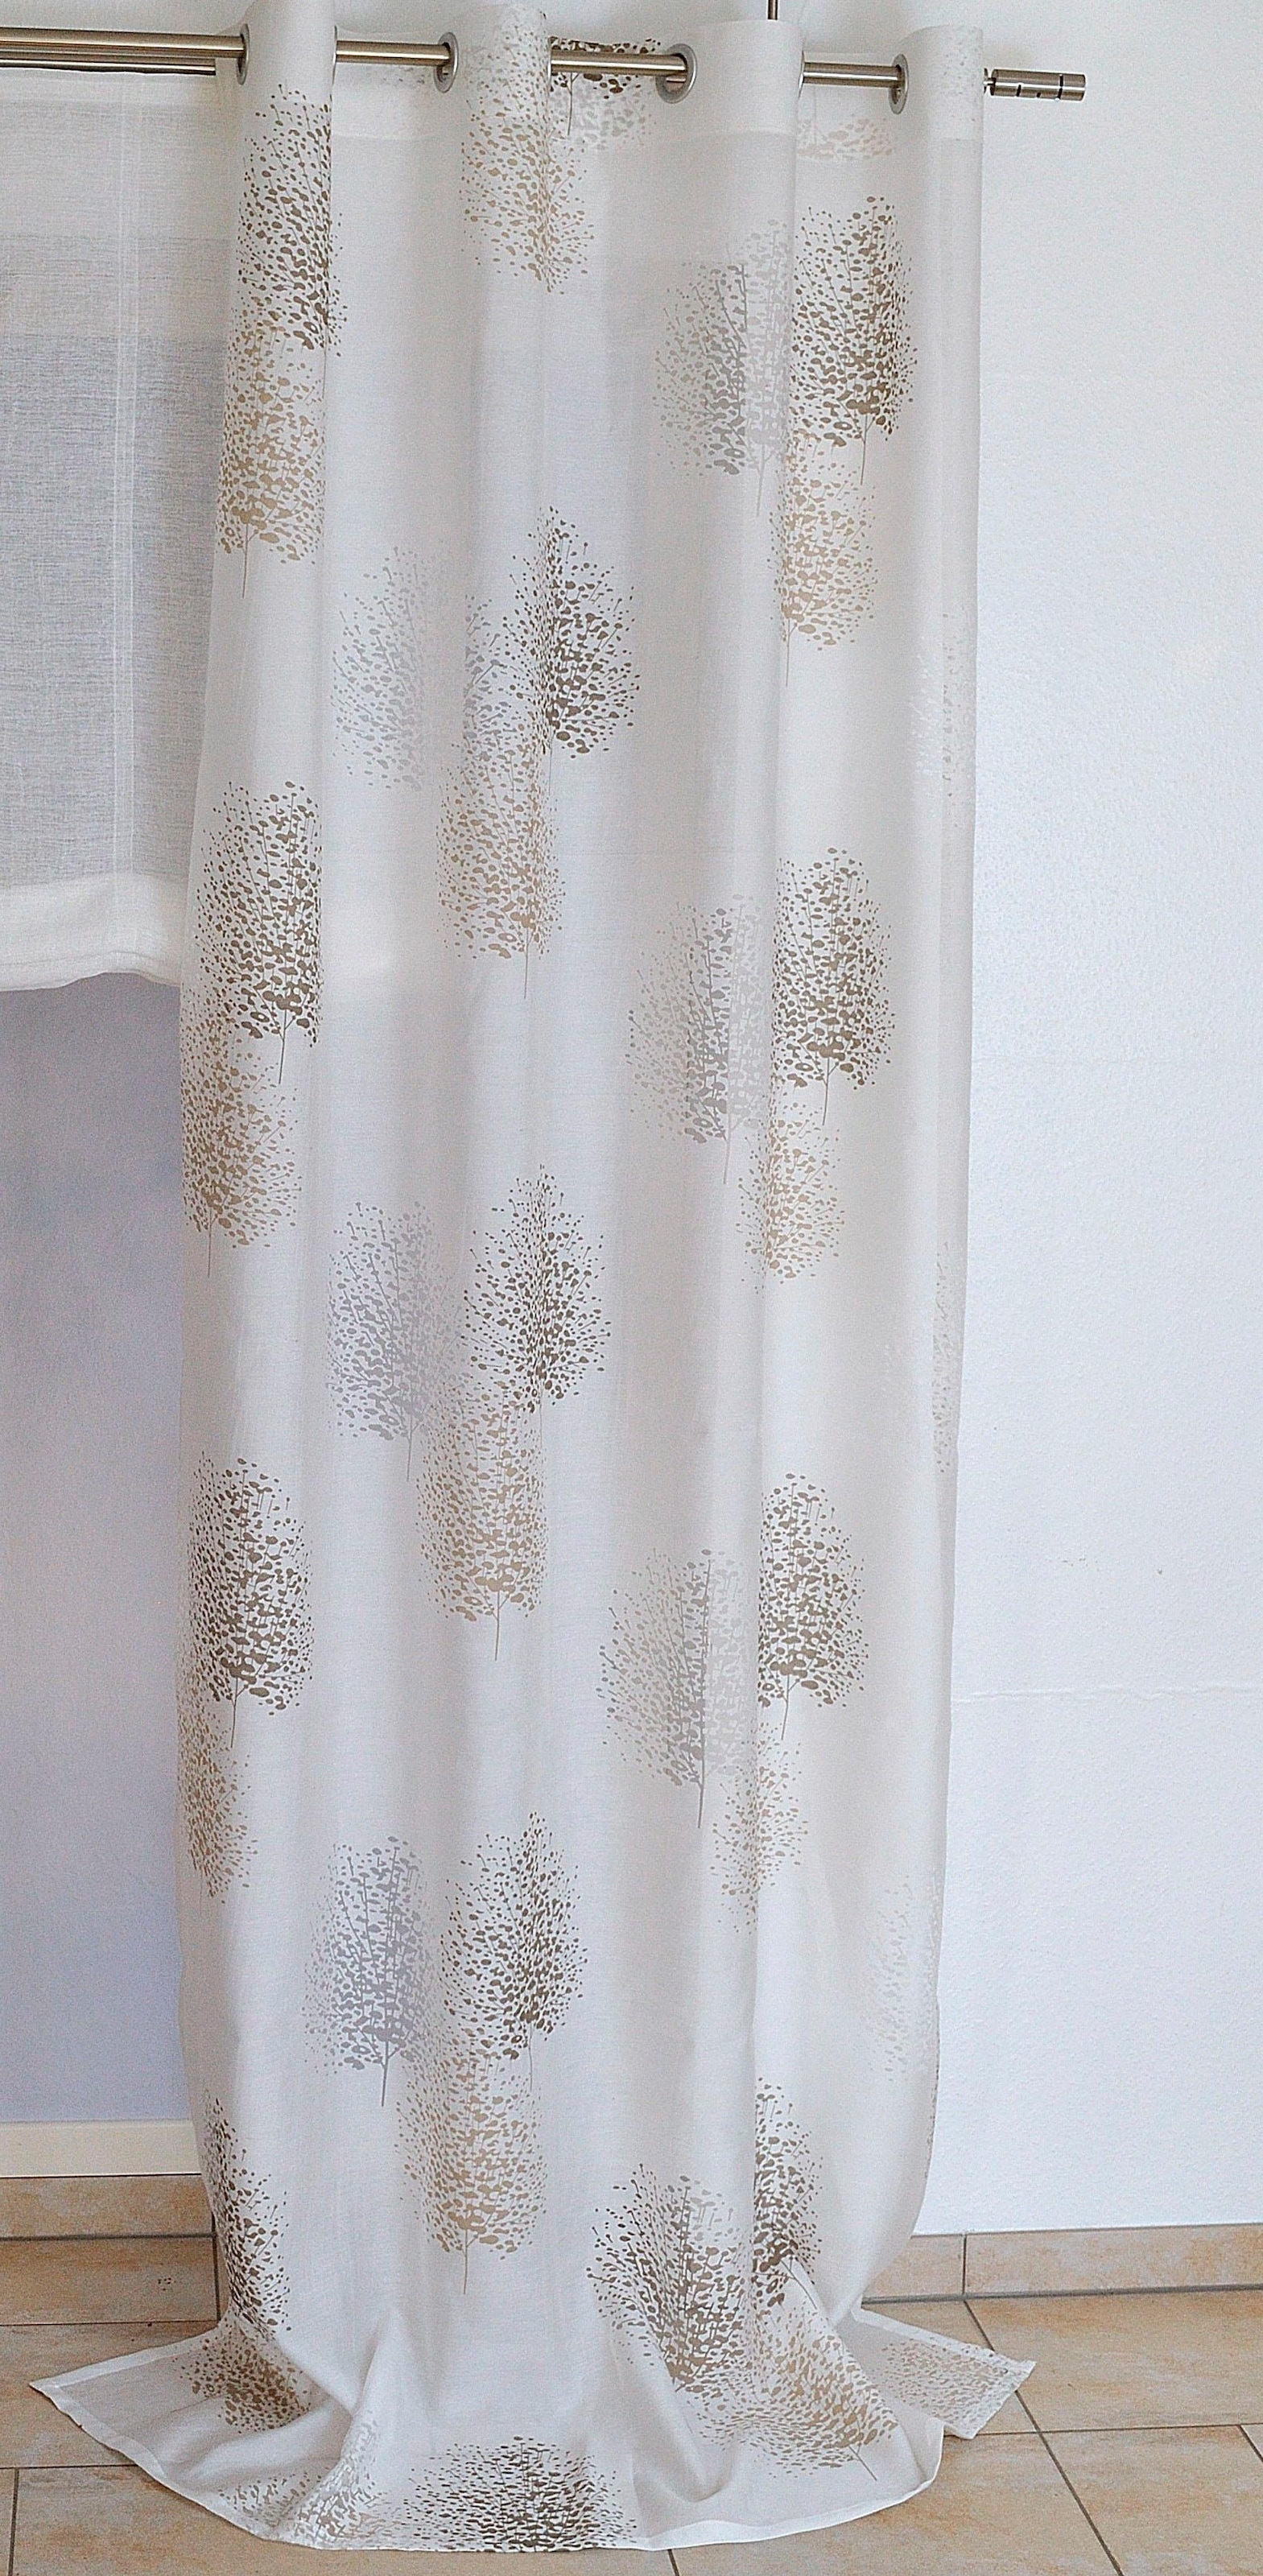 Kutti Vorhang »Belinda«, (1 online kaufen bedruckt, Viskose-Polyester St.), halbtransparent, Gardine, Ausbrenner